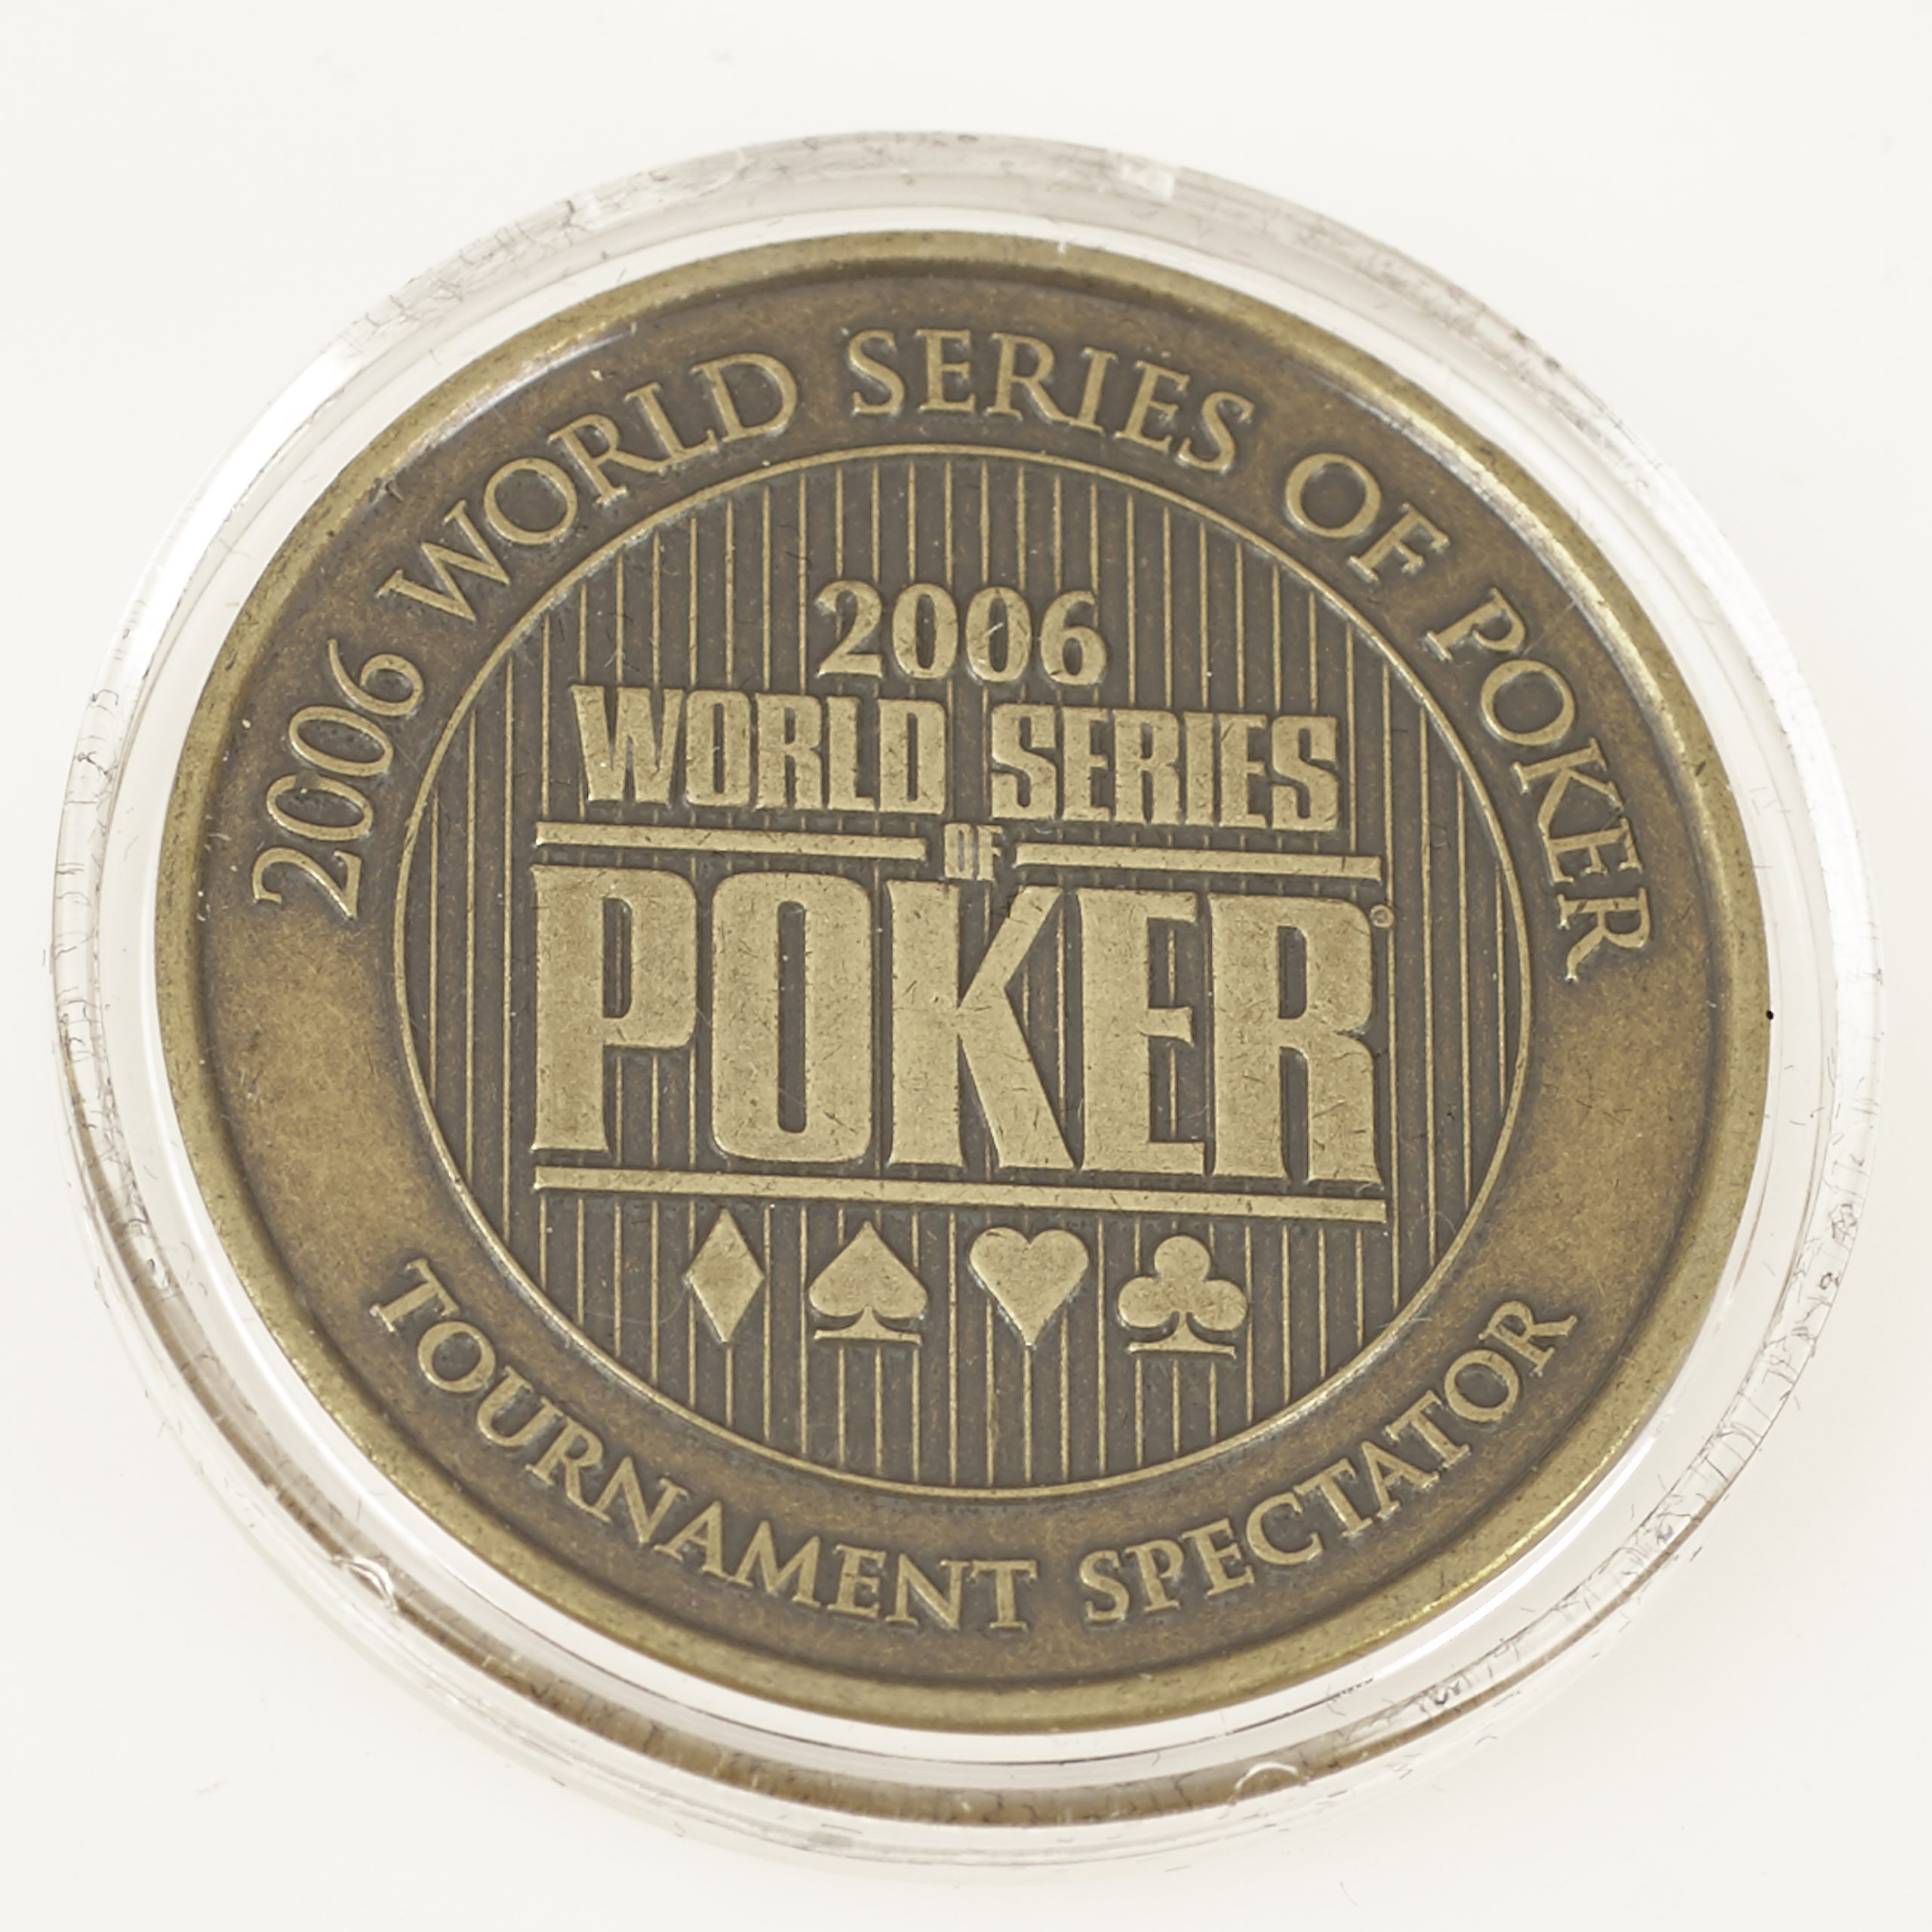 WSOP WORLD SERIES OF POKER 2006, TOURNAMENT SPECTATOR, Poker Card Guard